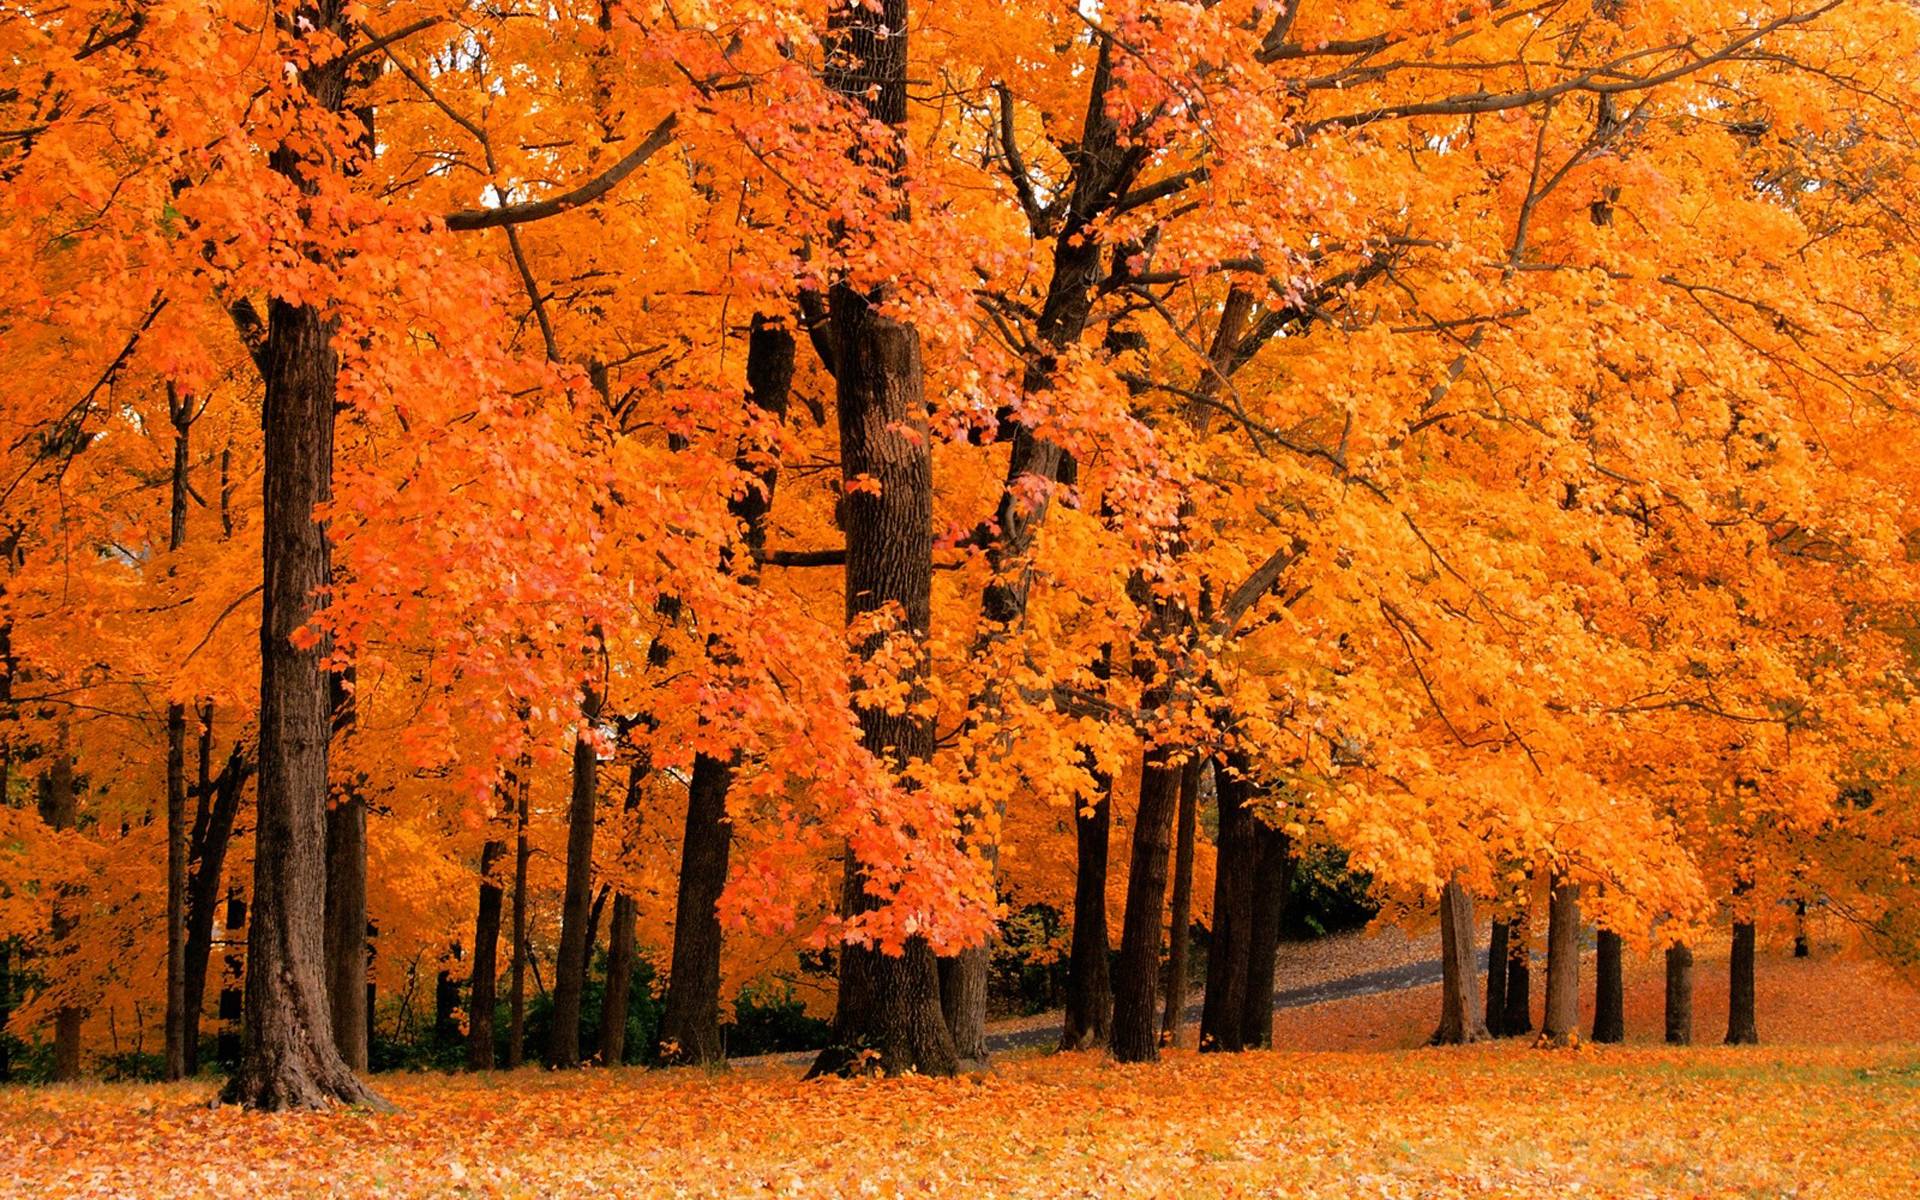 Autumn leaves falling background LAutomne / Autumn Pinterest